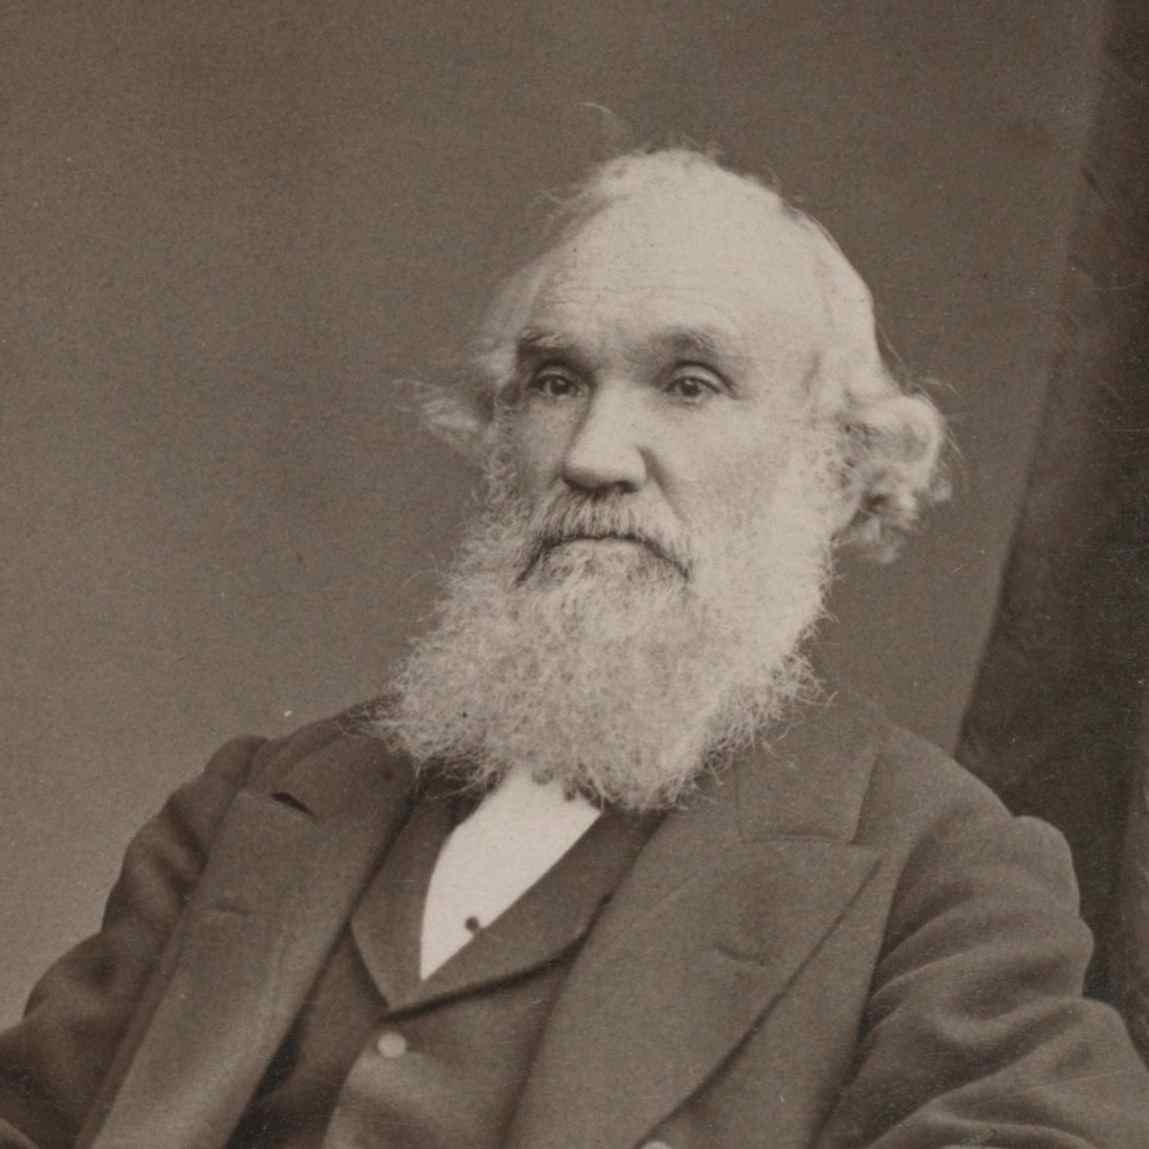 John Steele (1821 - 1903)